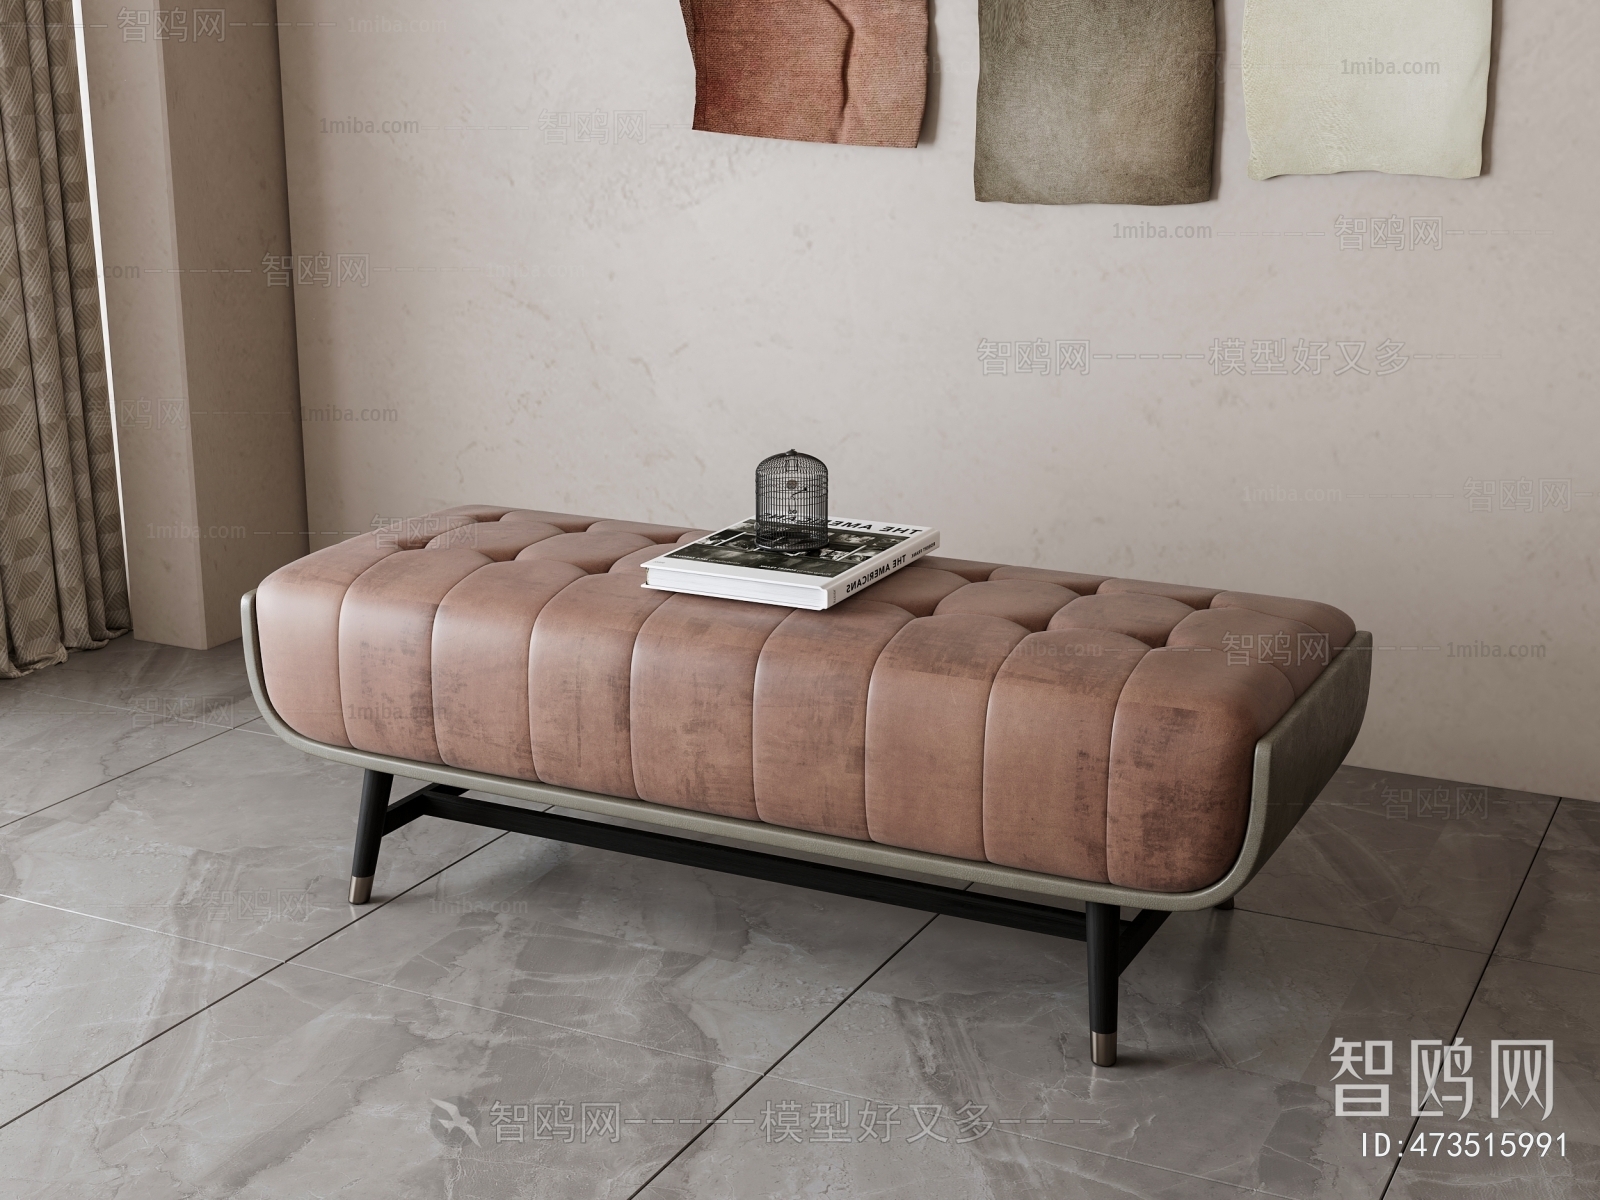 New Chinese Style Sofa Stool